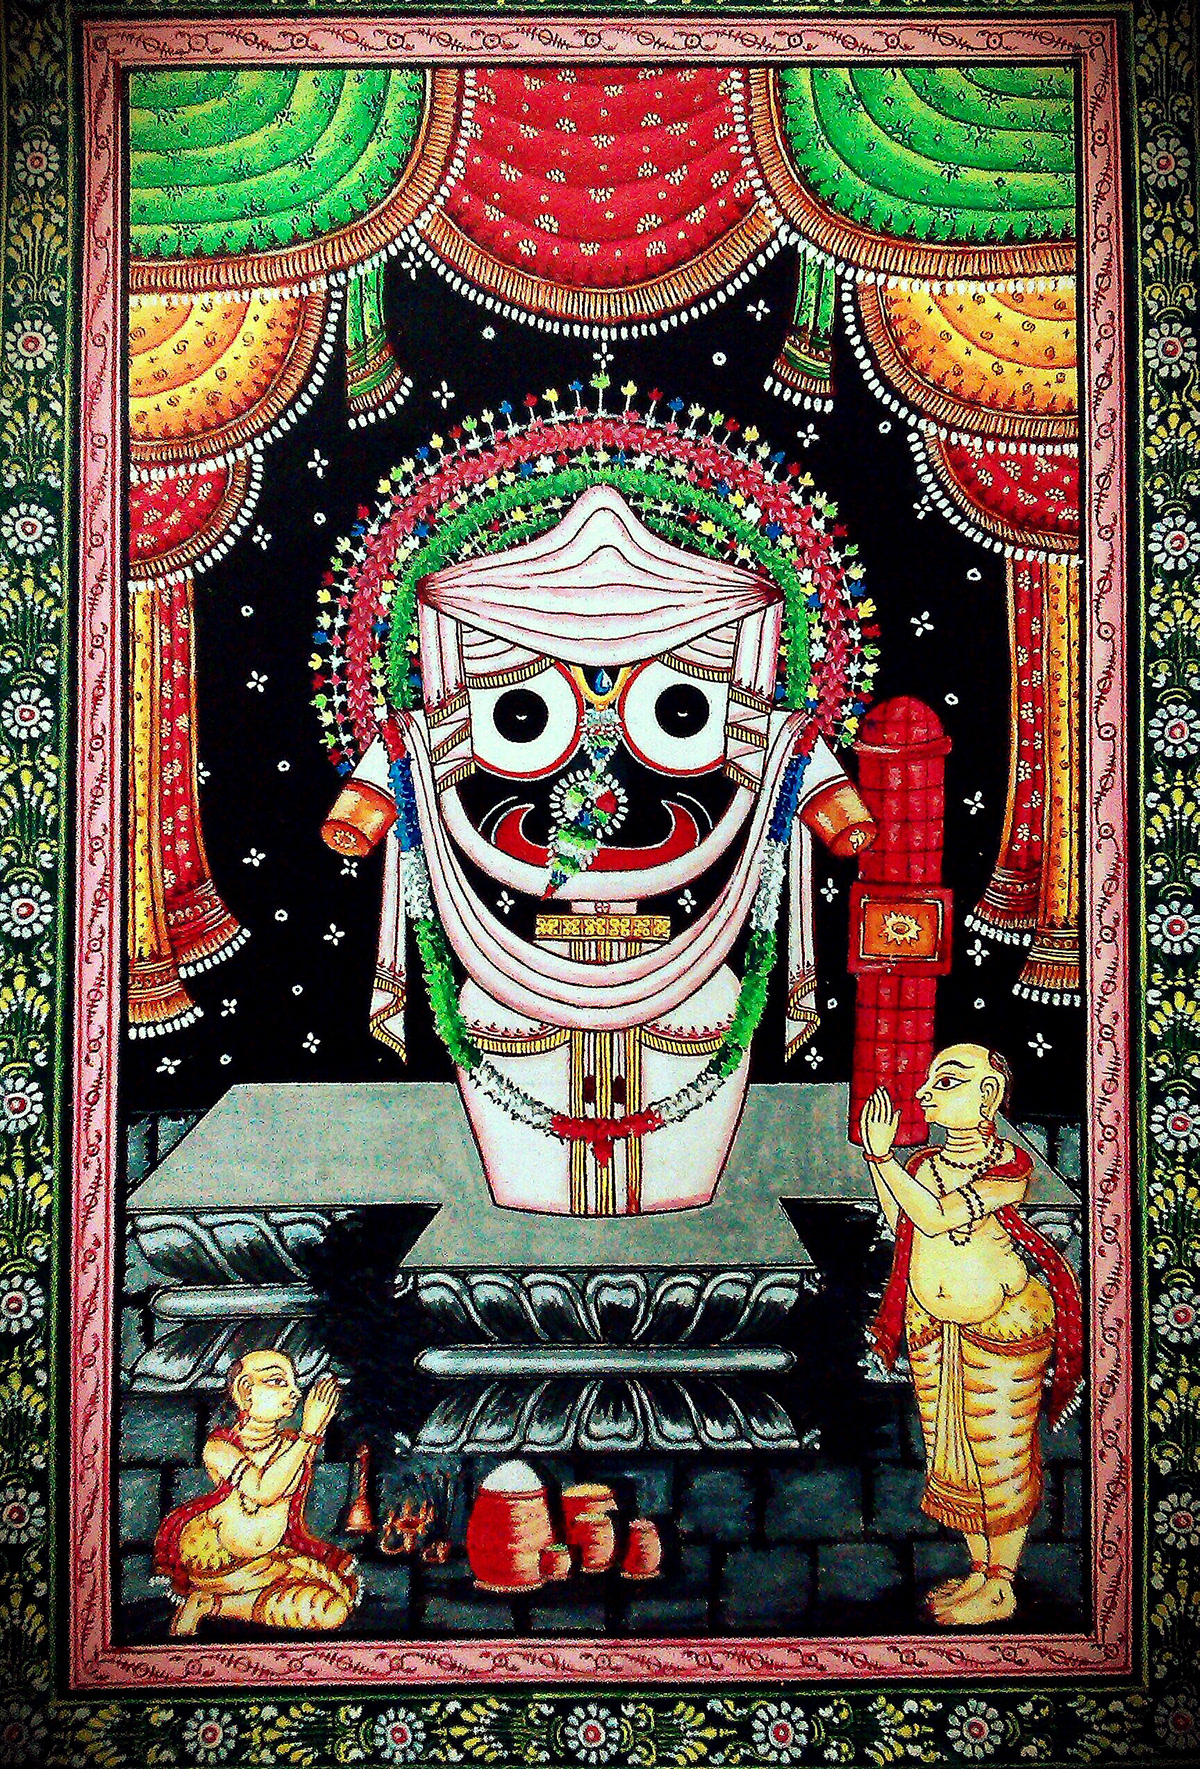 Hindu religion God jagannath   Puri Orissa iskcon rath yatra chariot festival India tradition culture heritage devotion